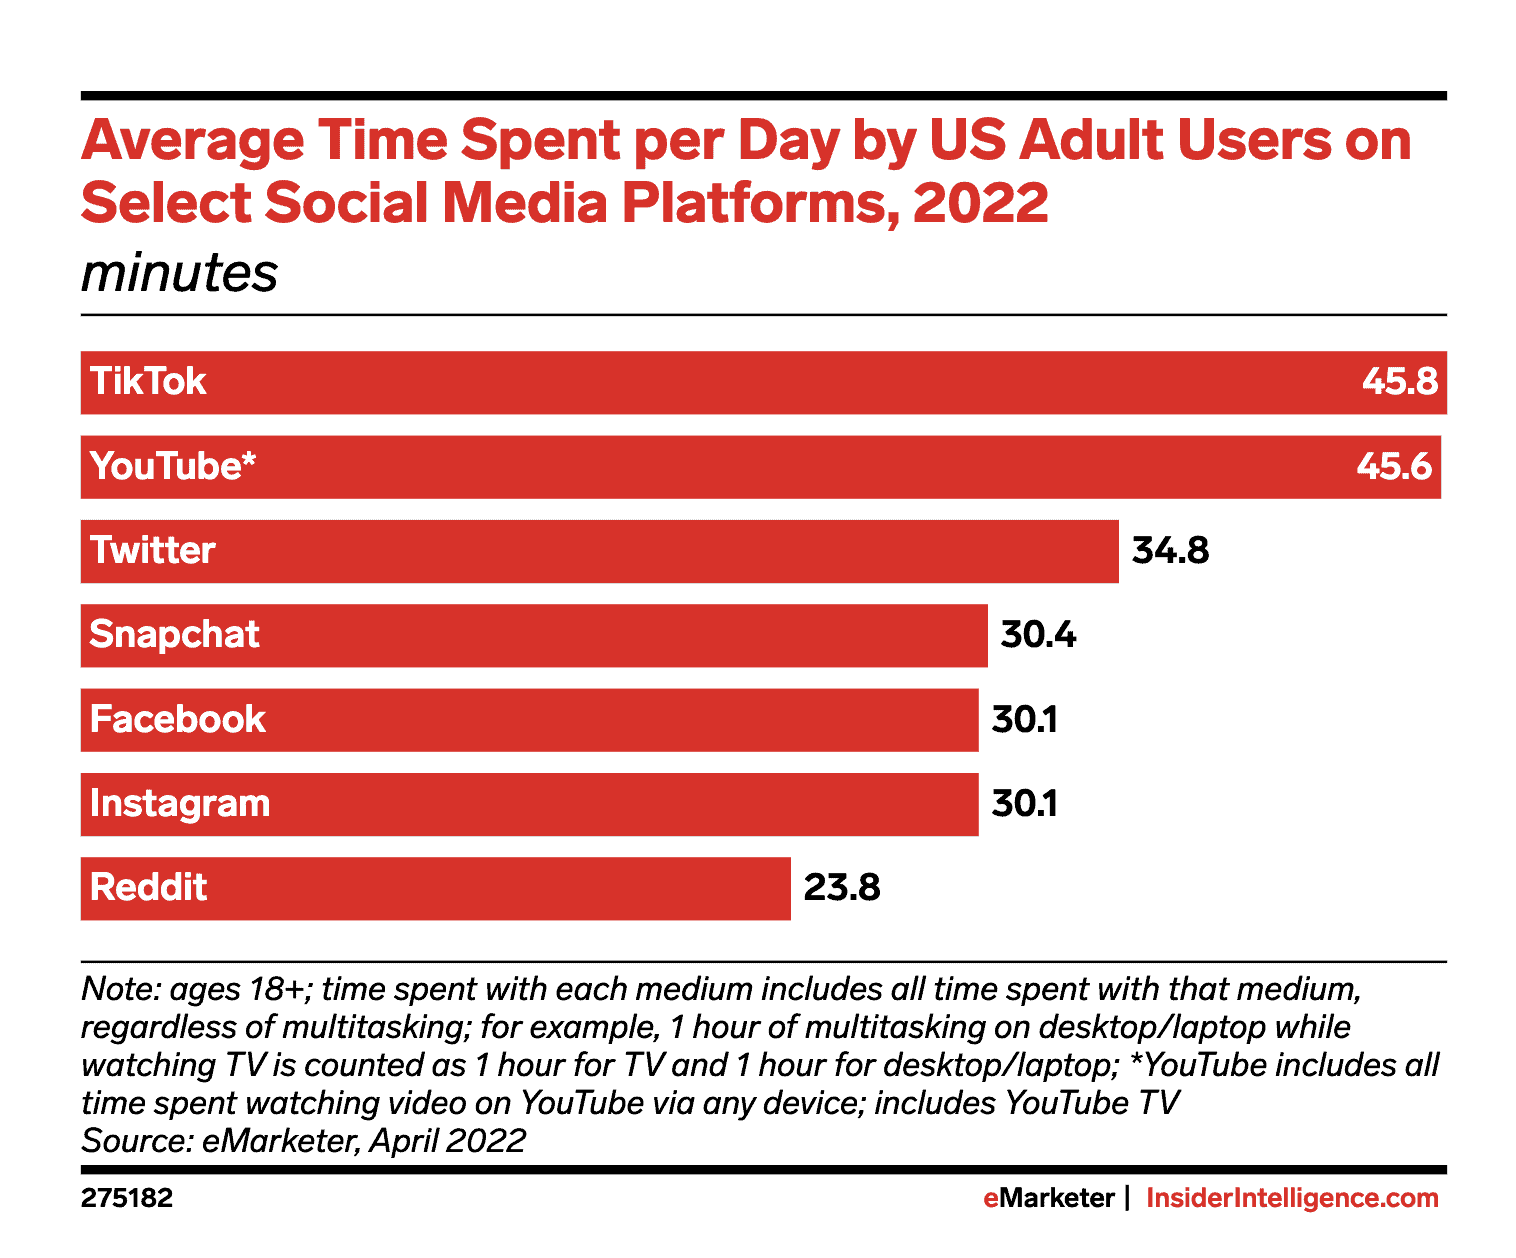 time per day spent on social media platforms